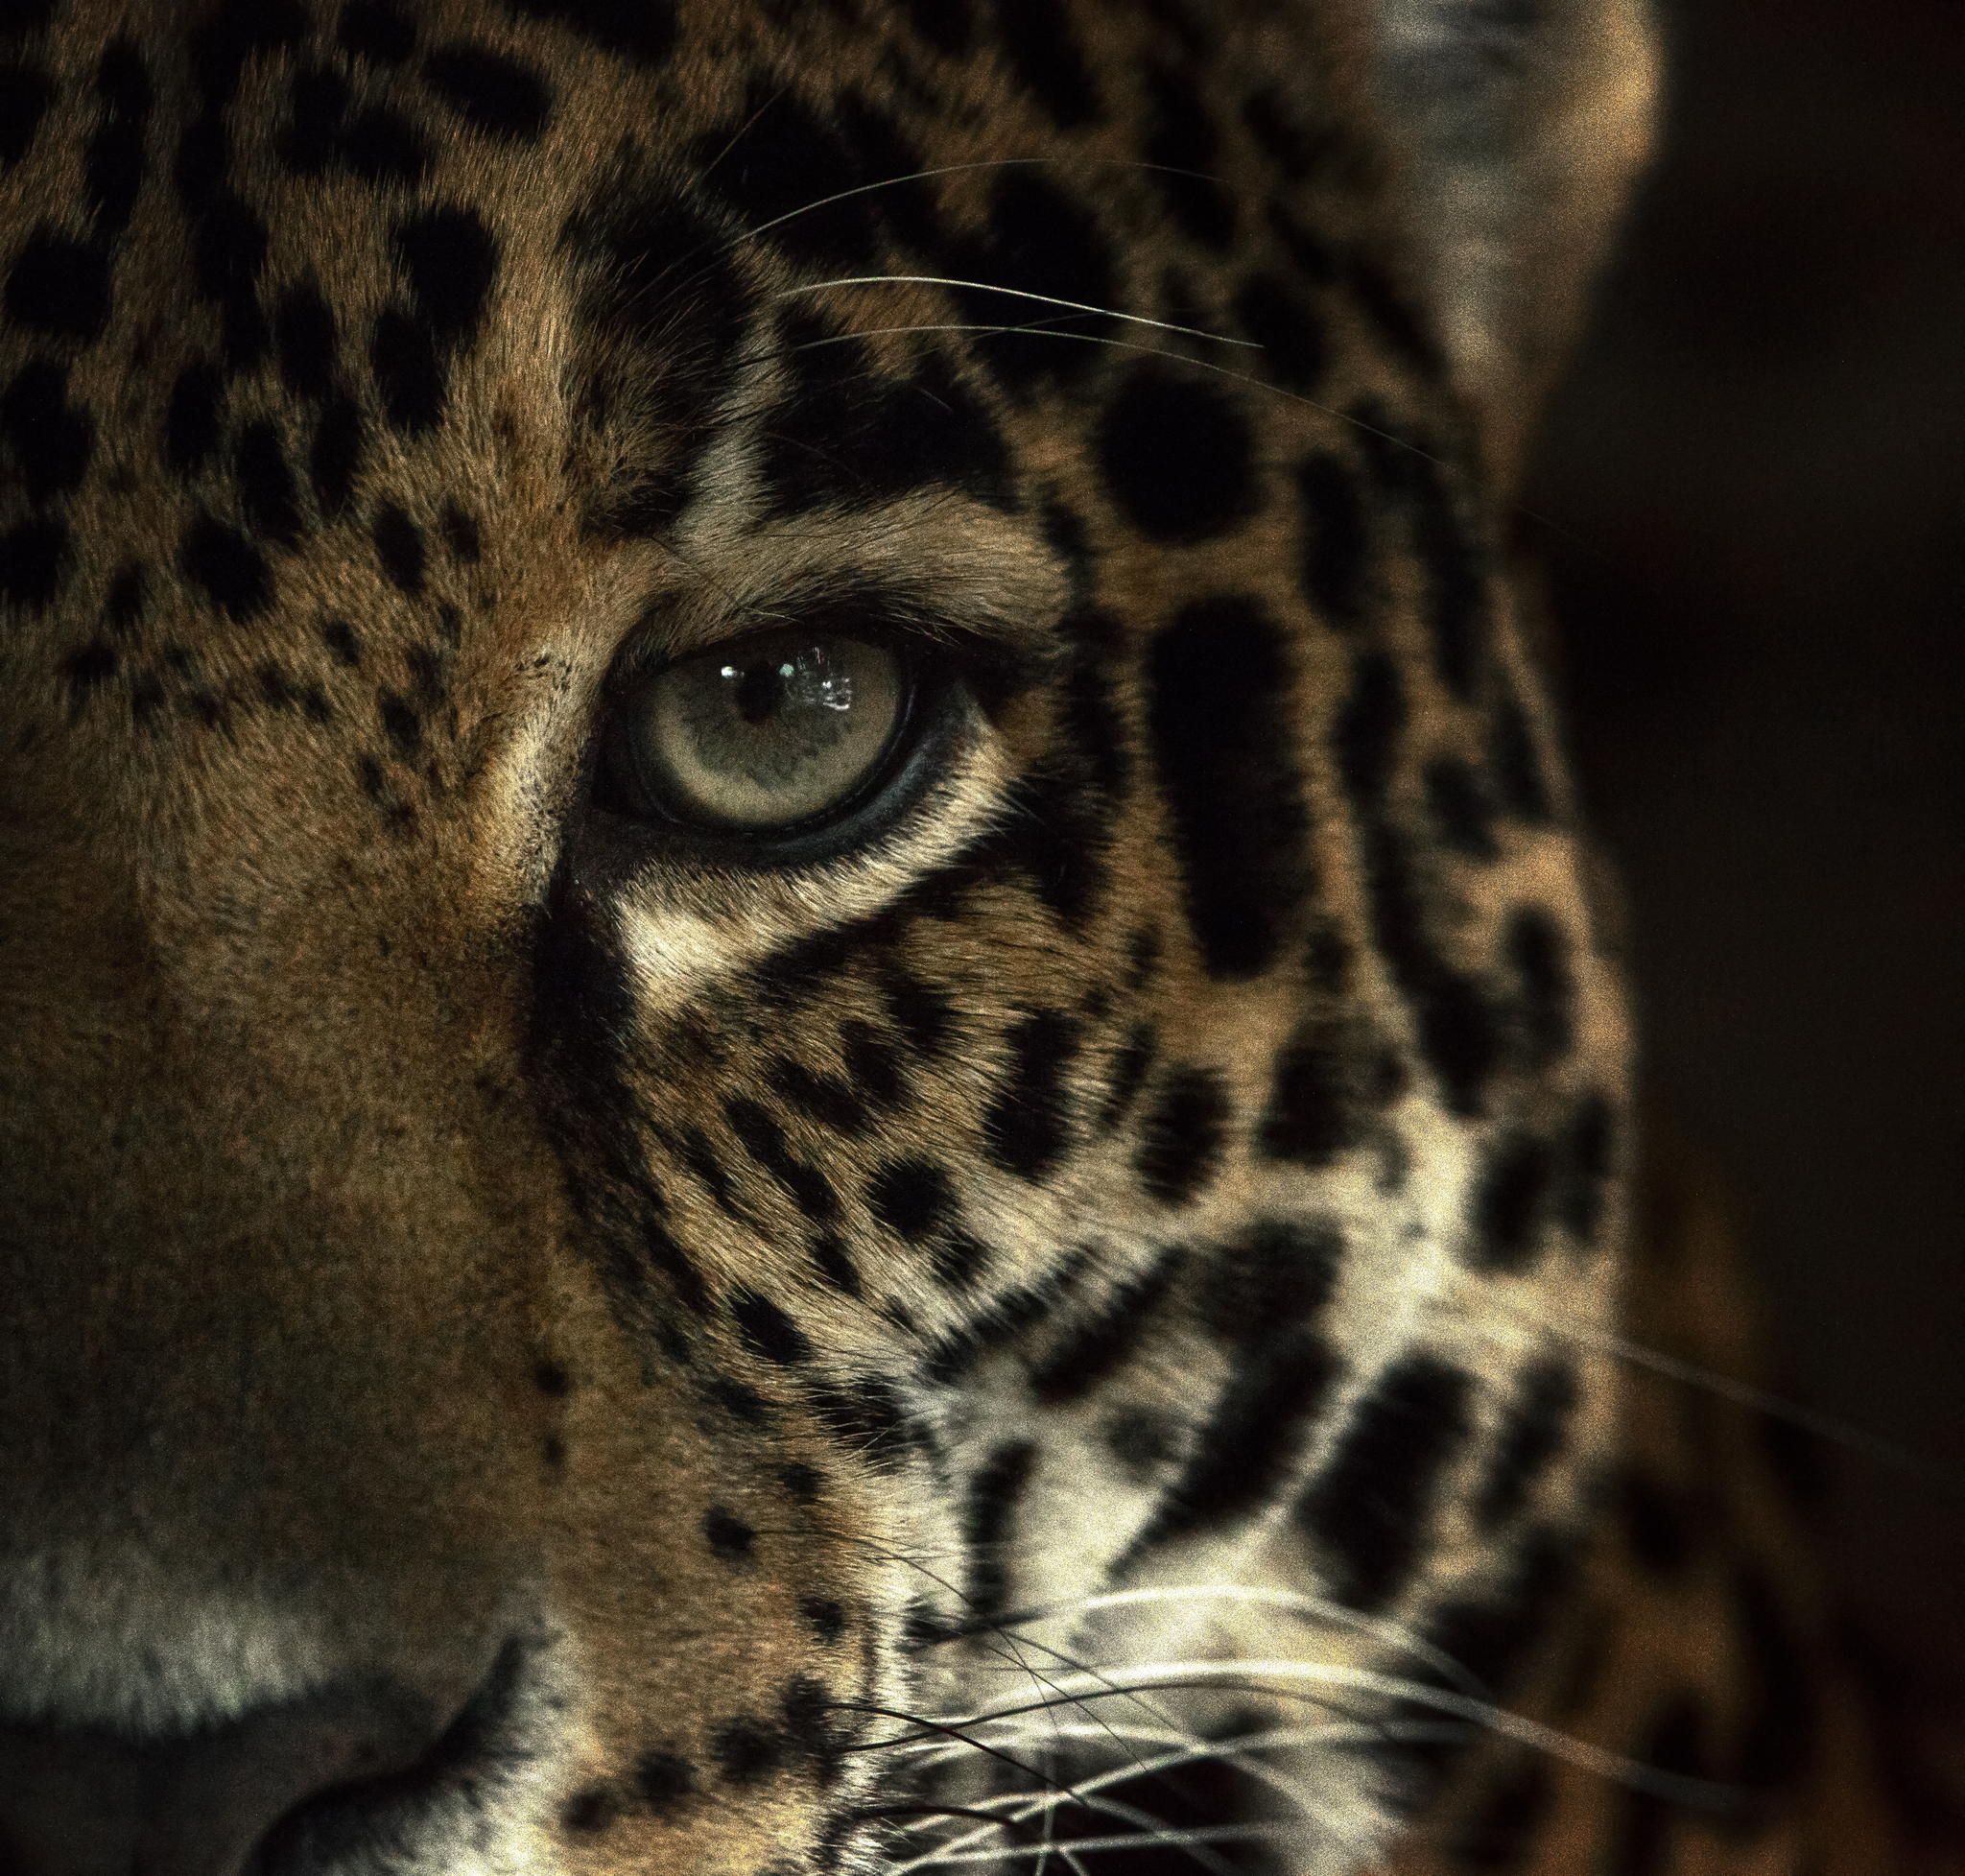 Jaguar eye | Wild cats | Pinterest | Cat and Animal